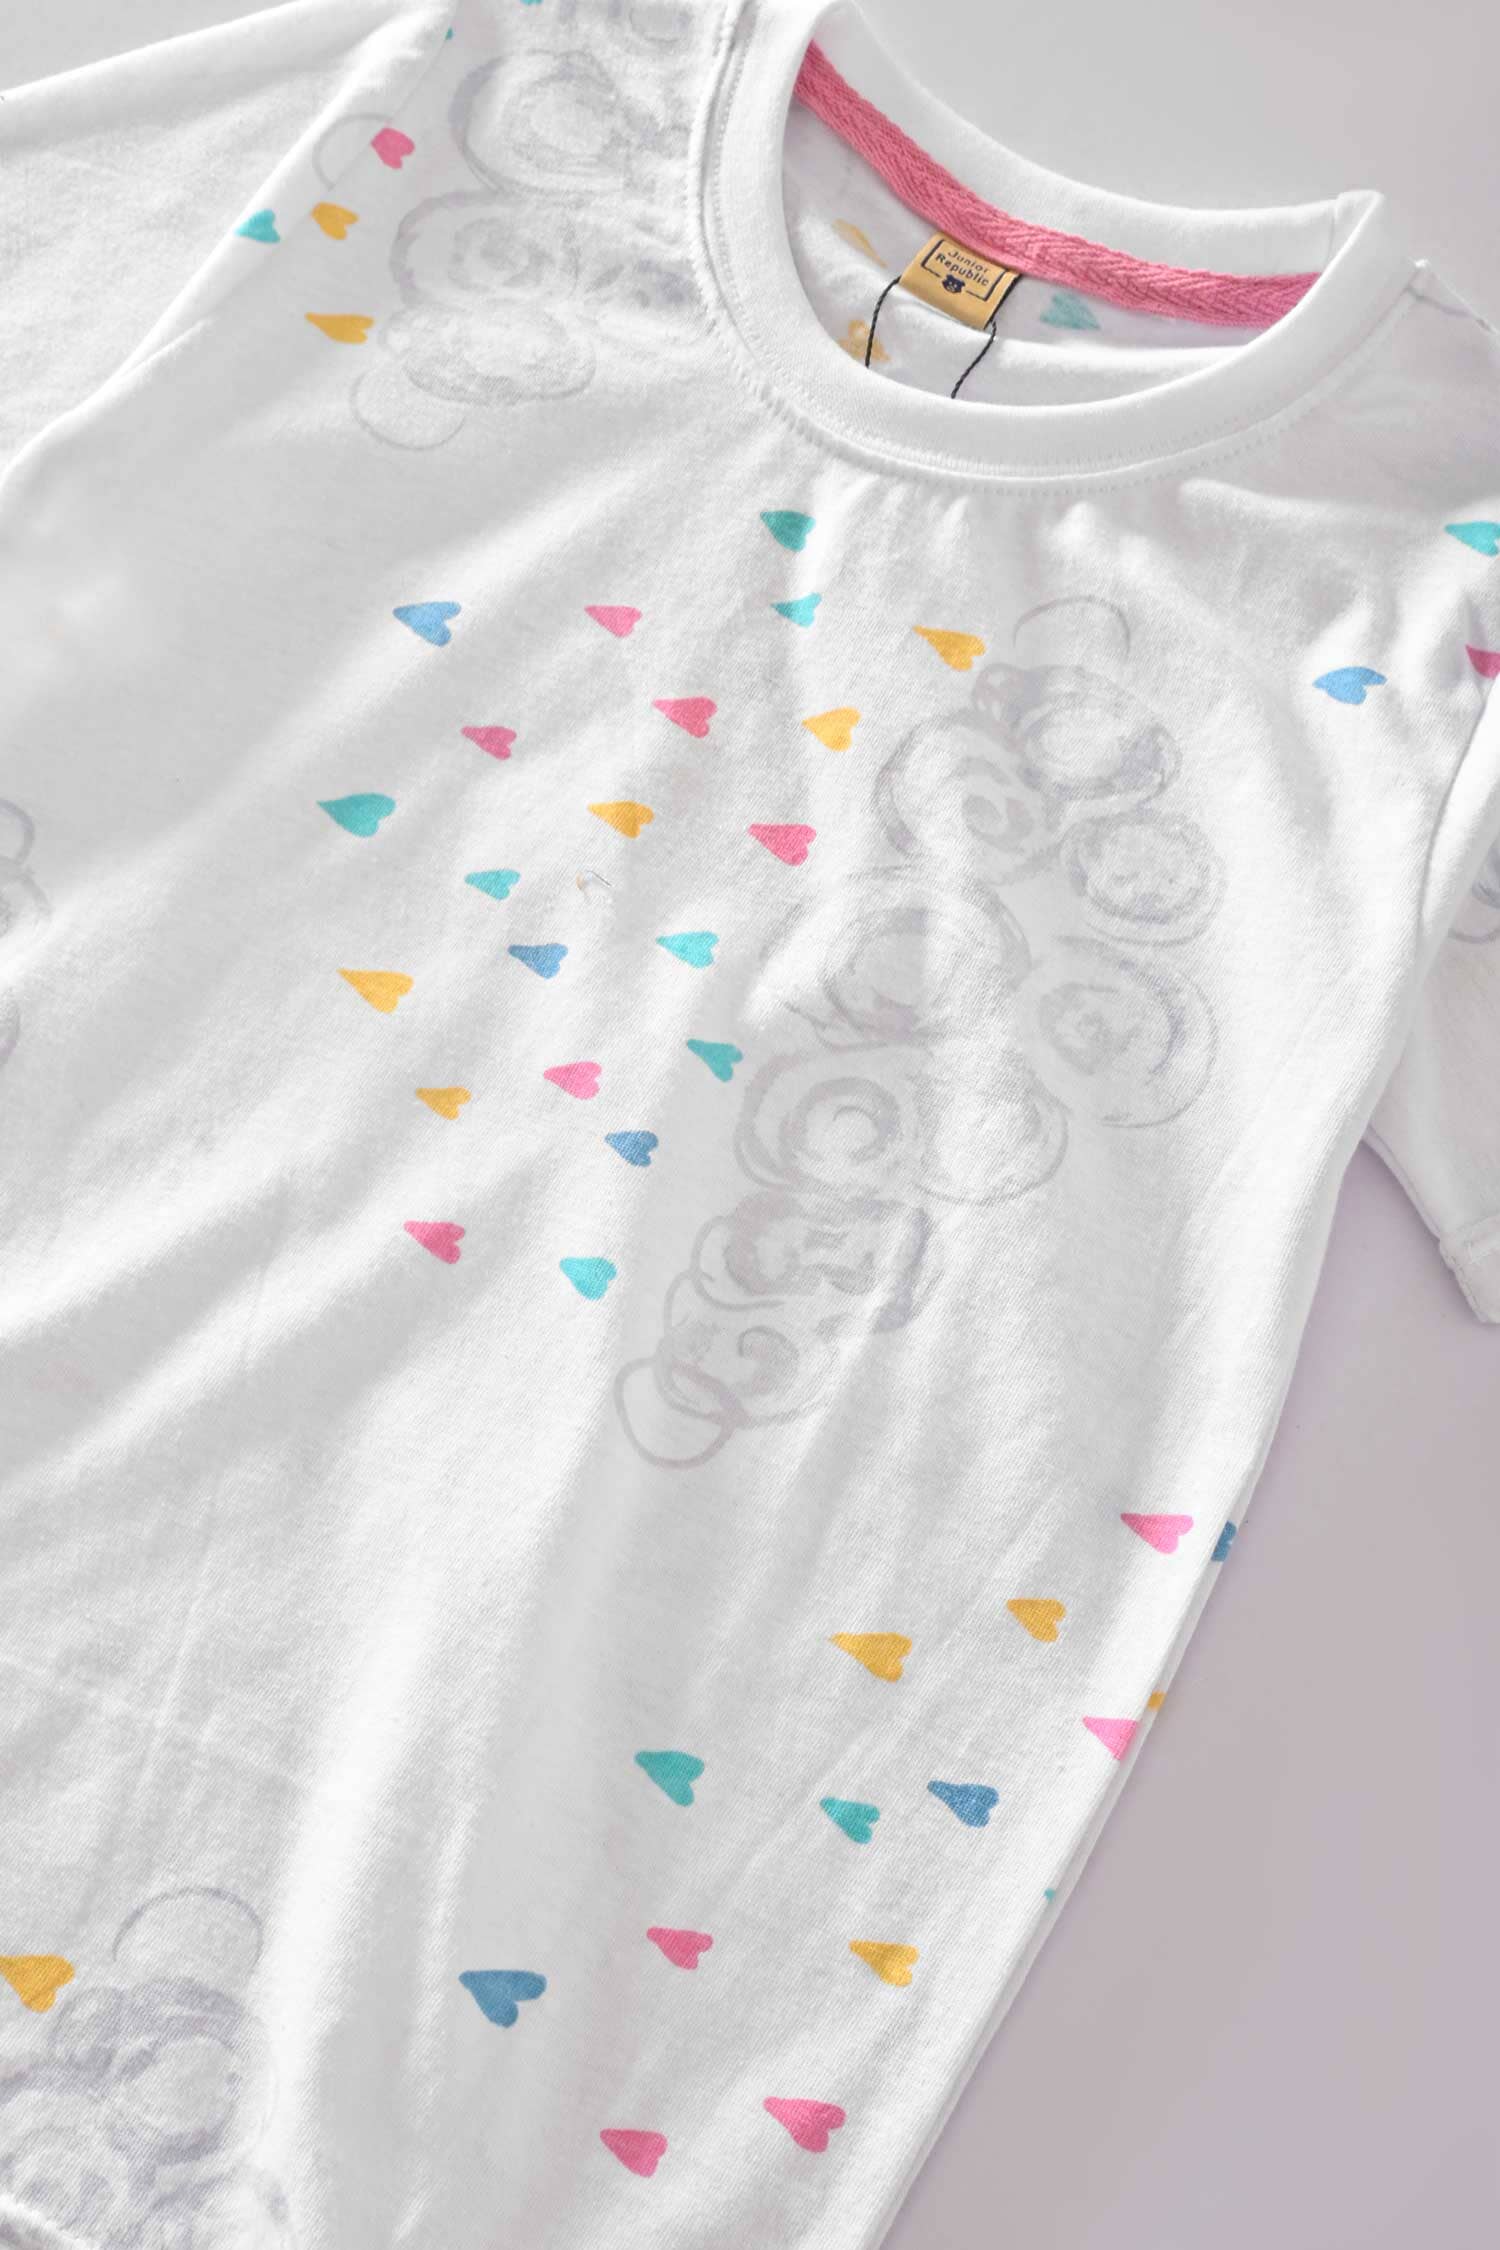 Junior Republic Kid's Heart Printed Tee Shirt